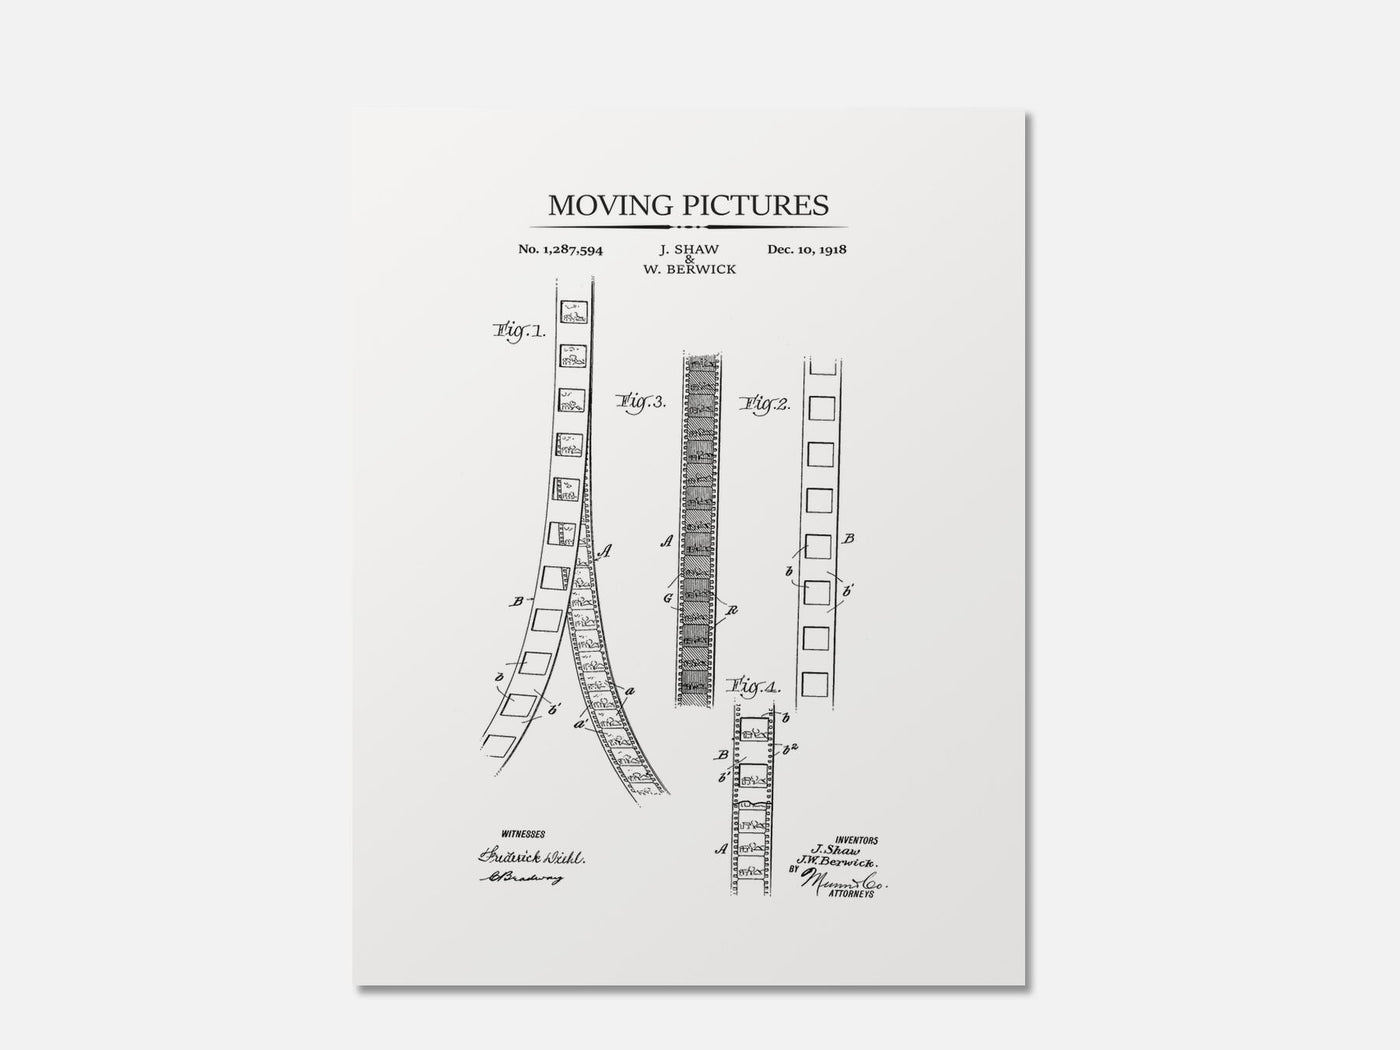 Filmstrip Patent Print mockup - A_t10026.3-V1-PC_AP-SS_1-PS_5x7-C_whi variant